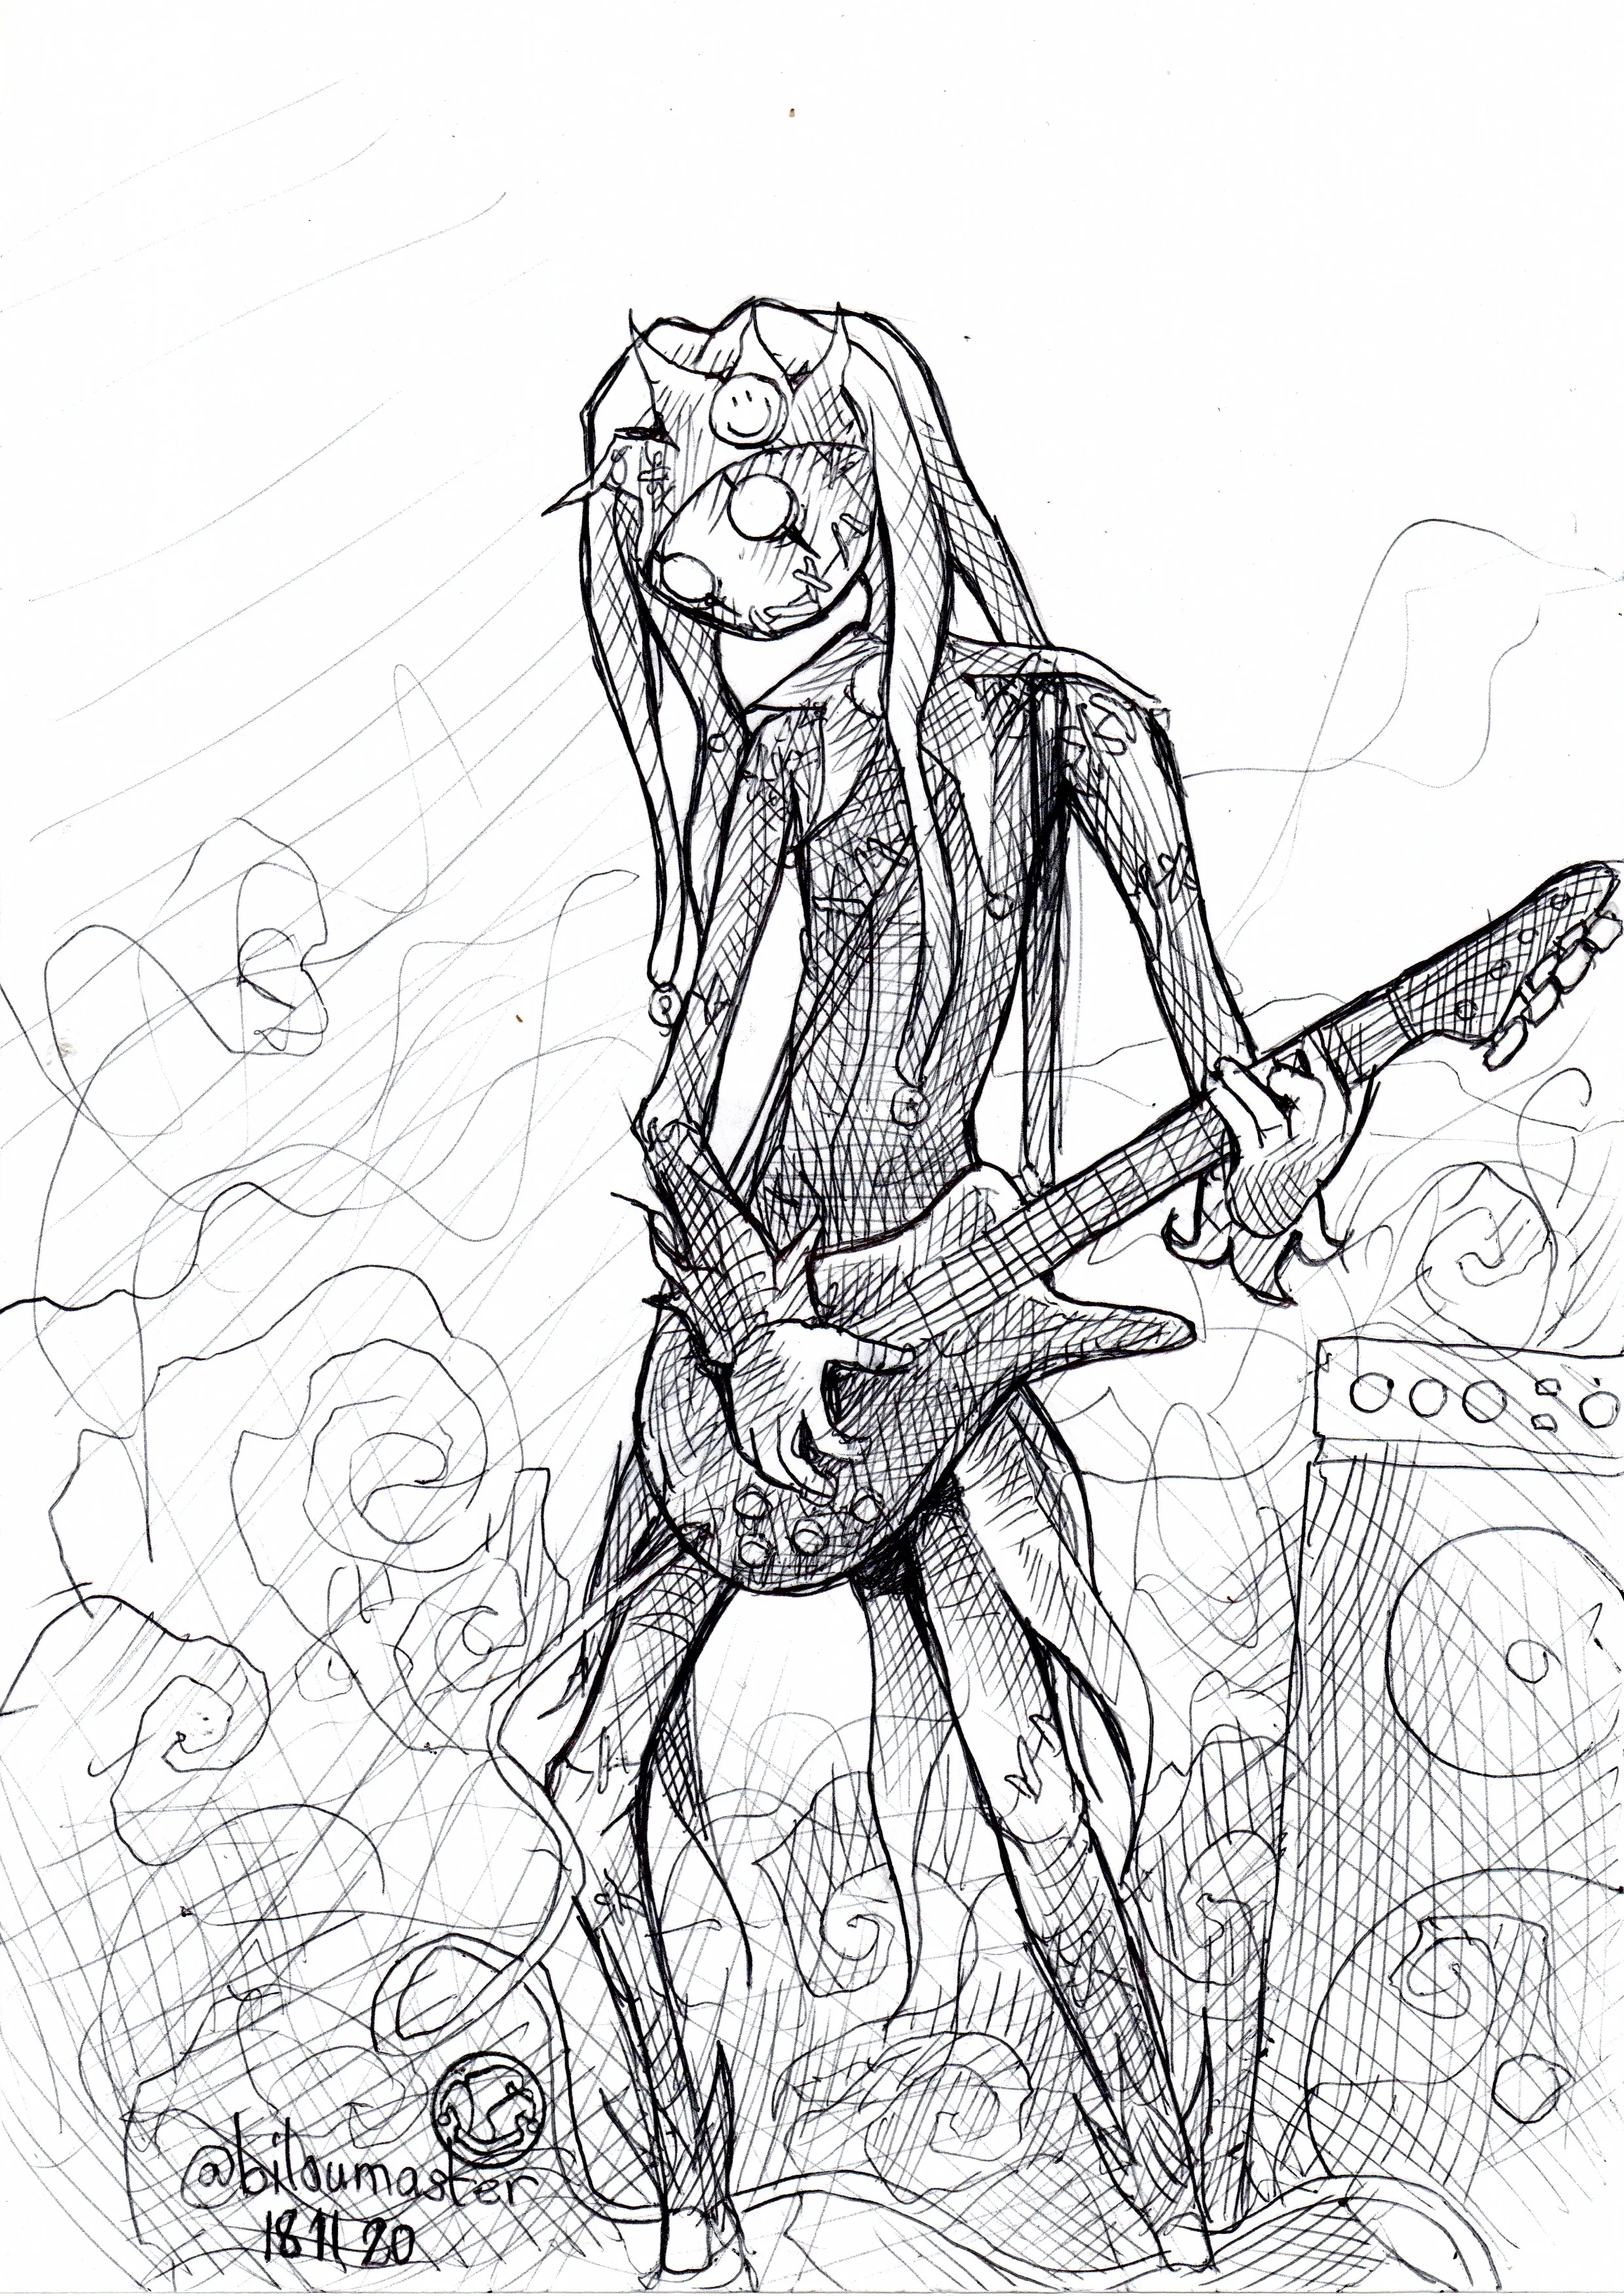 le zoli dessin « Joke bassiste » que j'ai bilouté le 18 novembre 2020